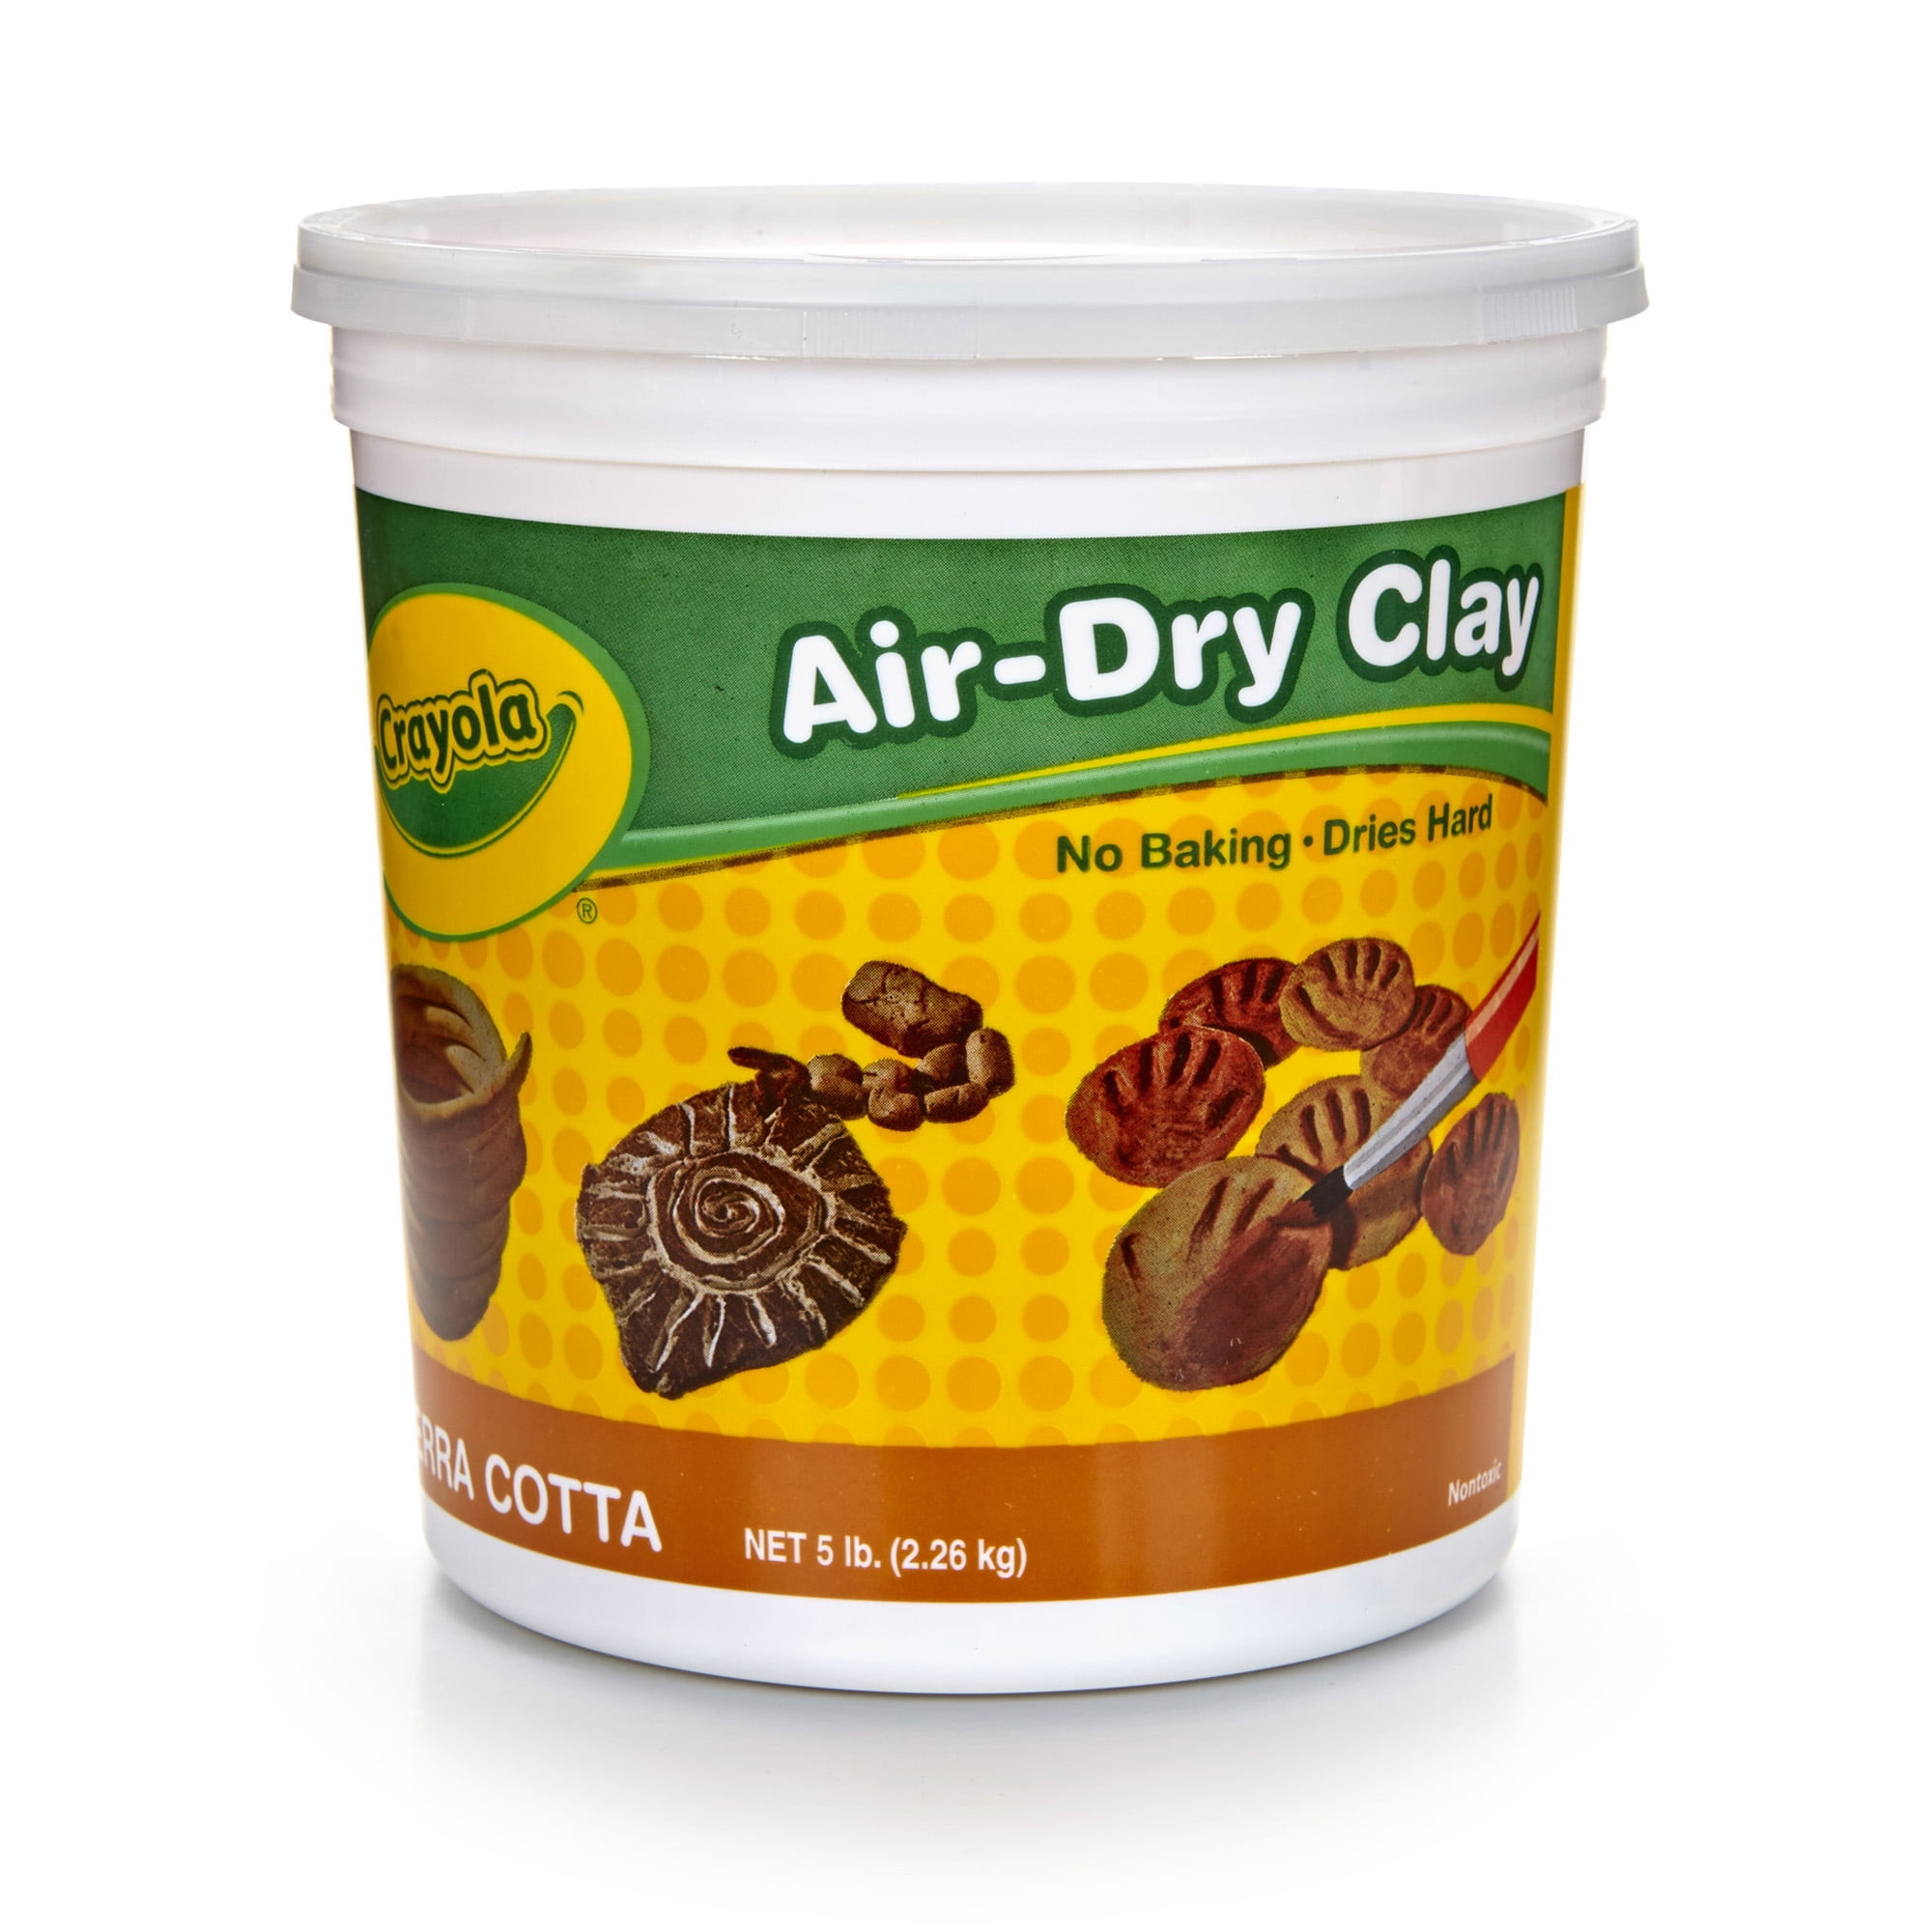 Crayola Air-Dry Clay, 5 Lb Tub, Terra Cotta - Walmart.com